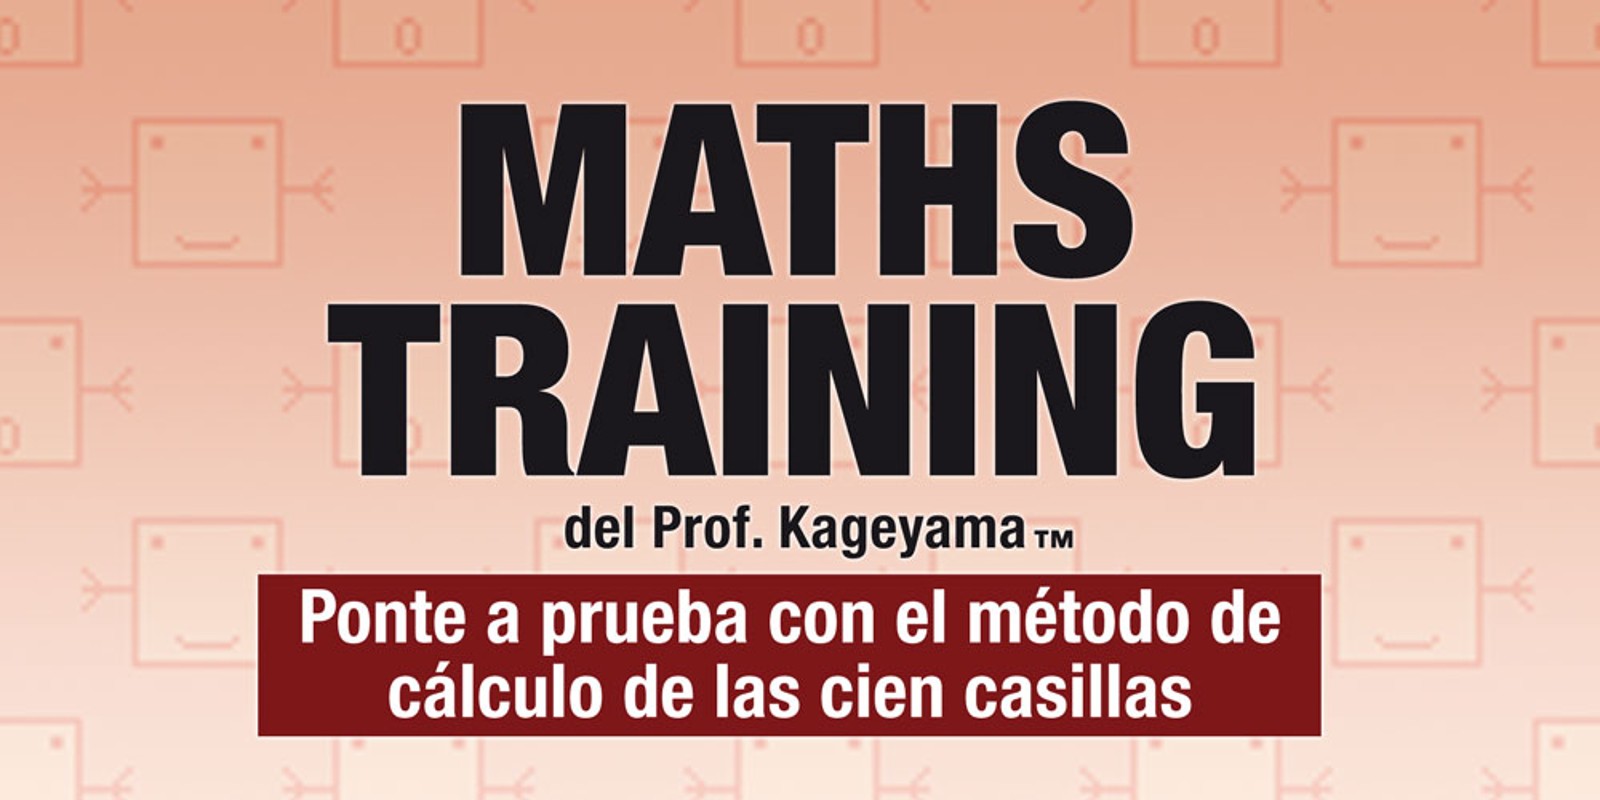 Maths Training del Prof. Kageyama